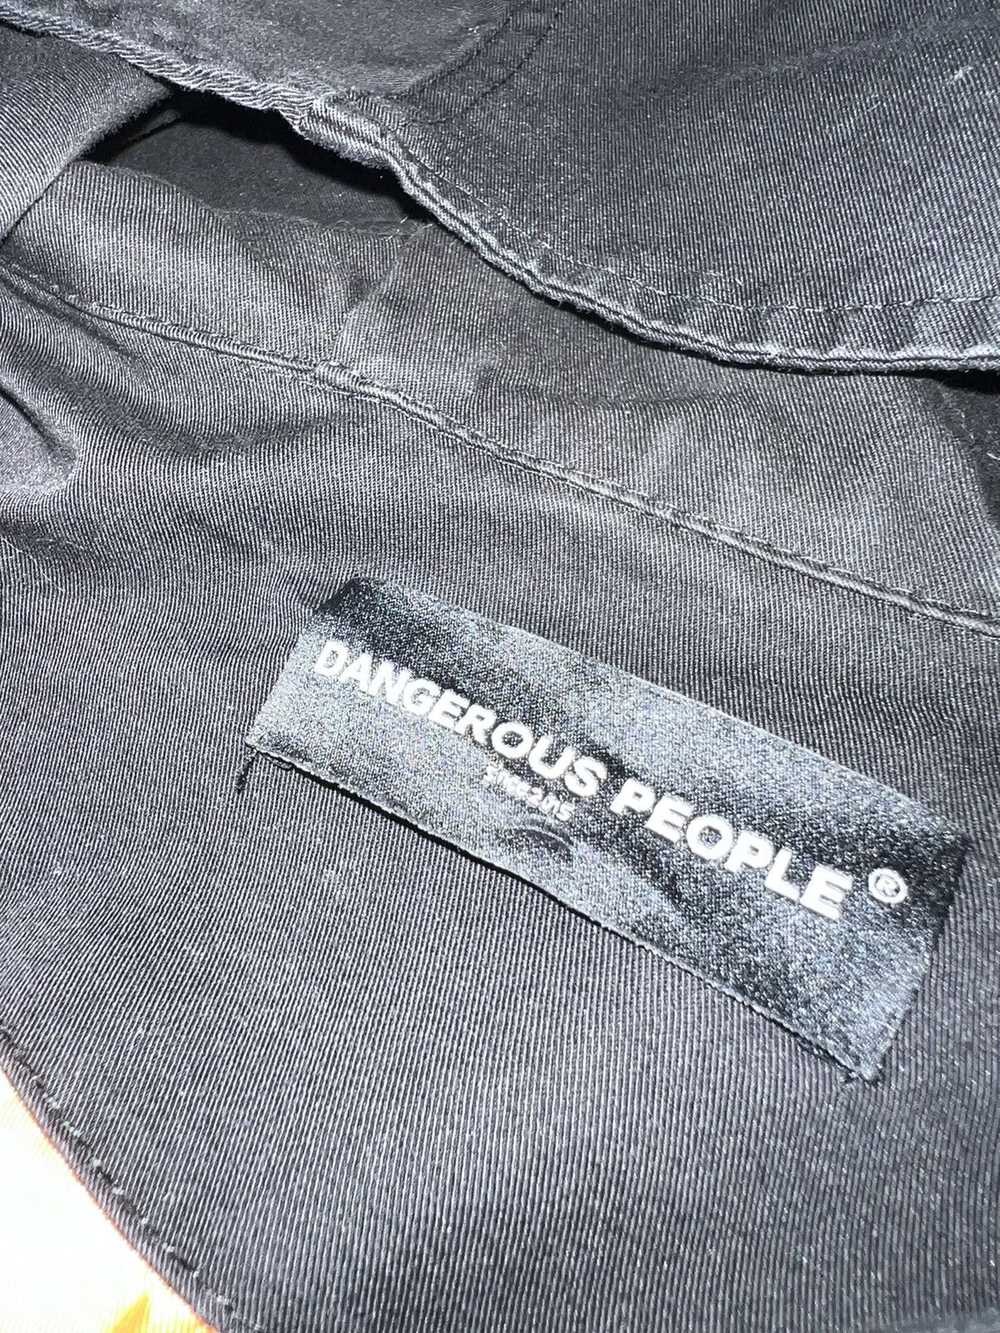 Streetwear Dangerous People Trench Coat Jacket si… - image 5